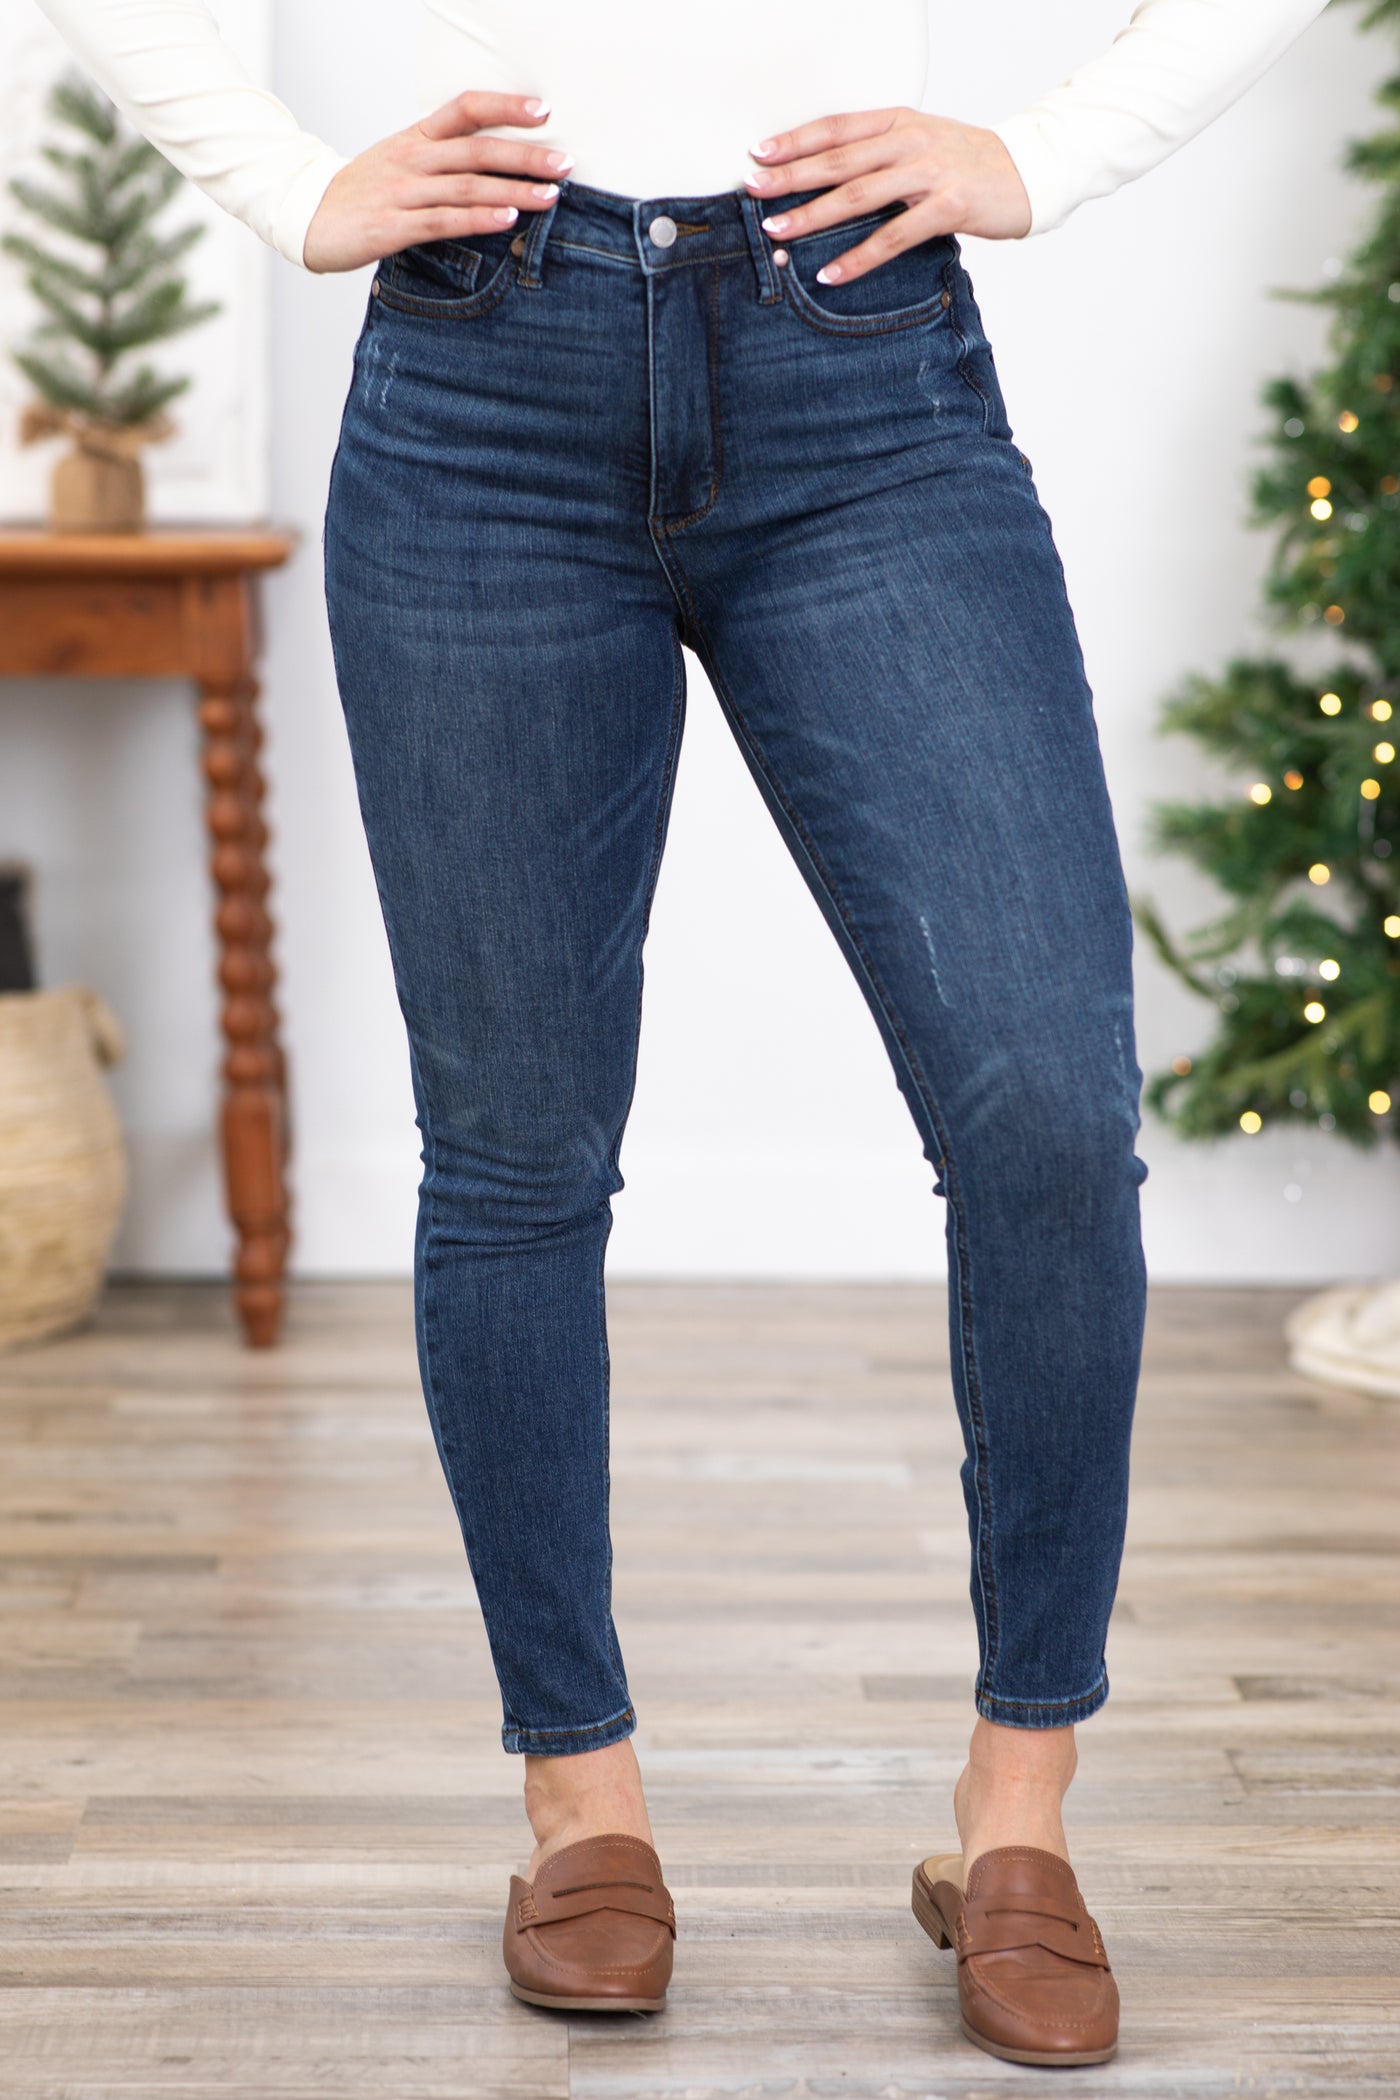 Tummy Control Denim & Jeans  Shop Judy Blue's Best-Selling Styles